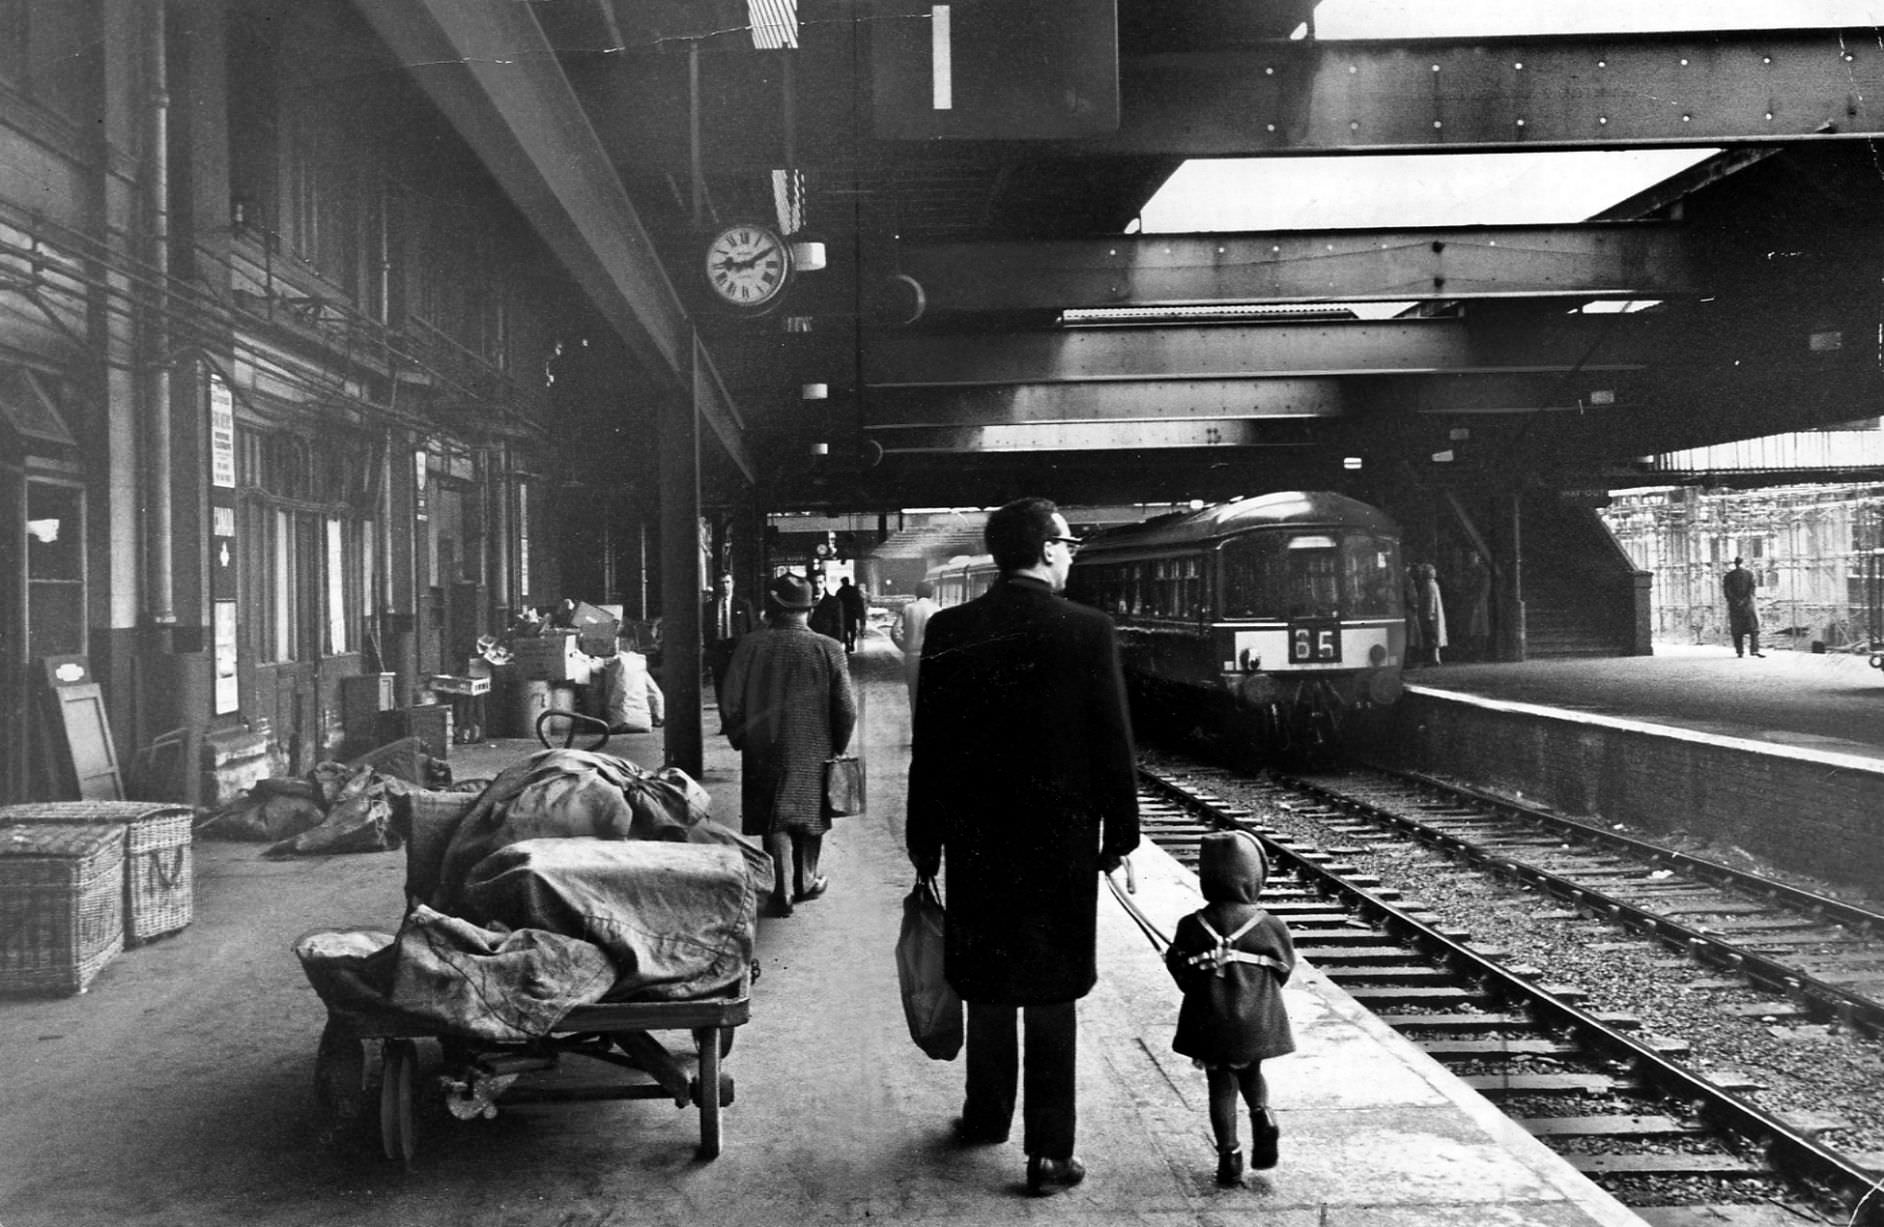 Platform 1 of New Street Station in Birmingham, in 1965.